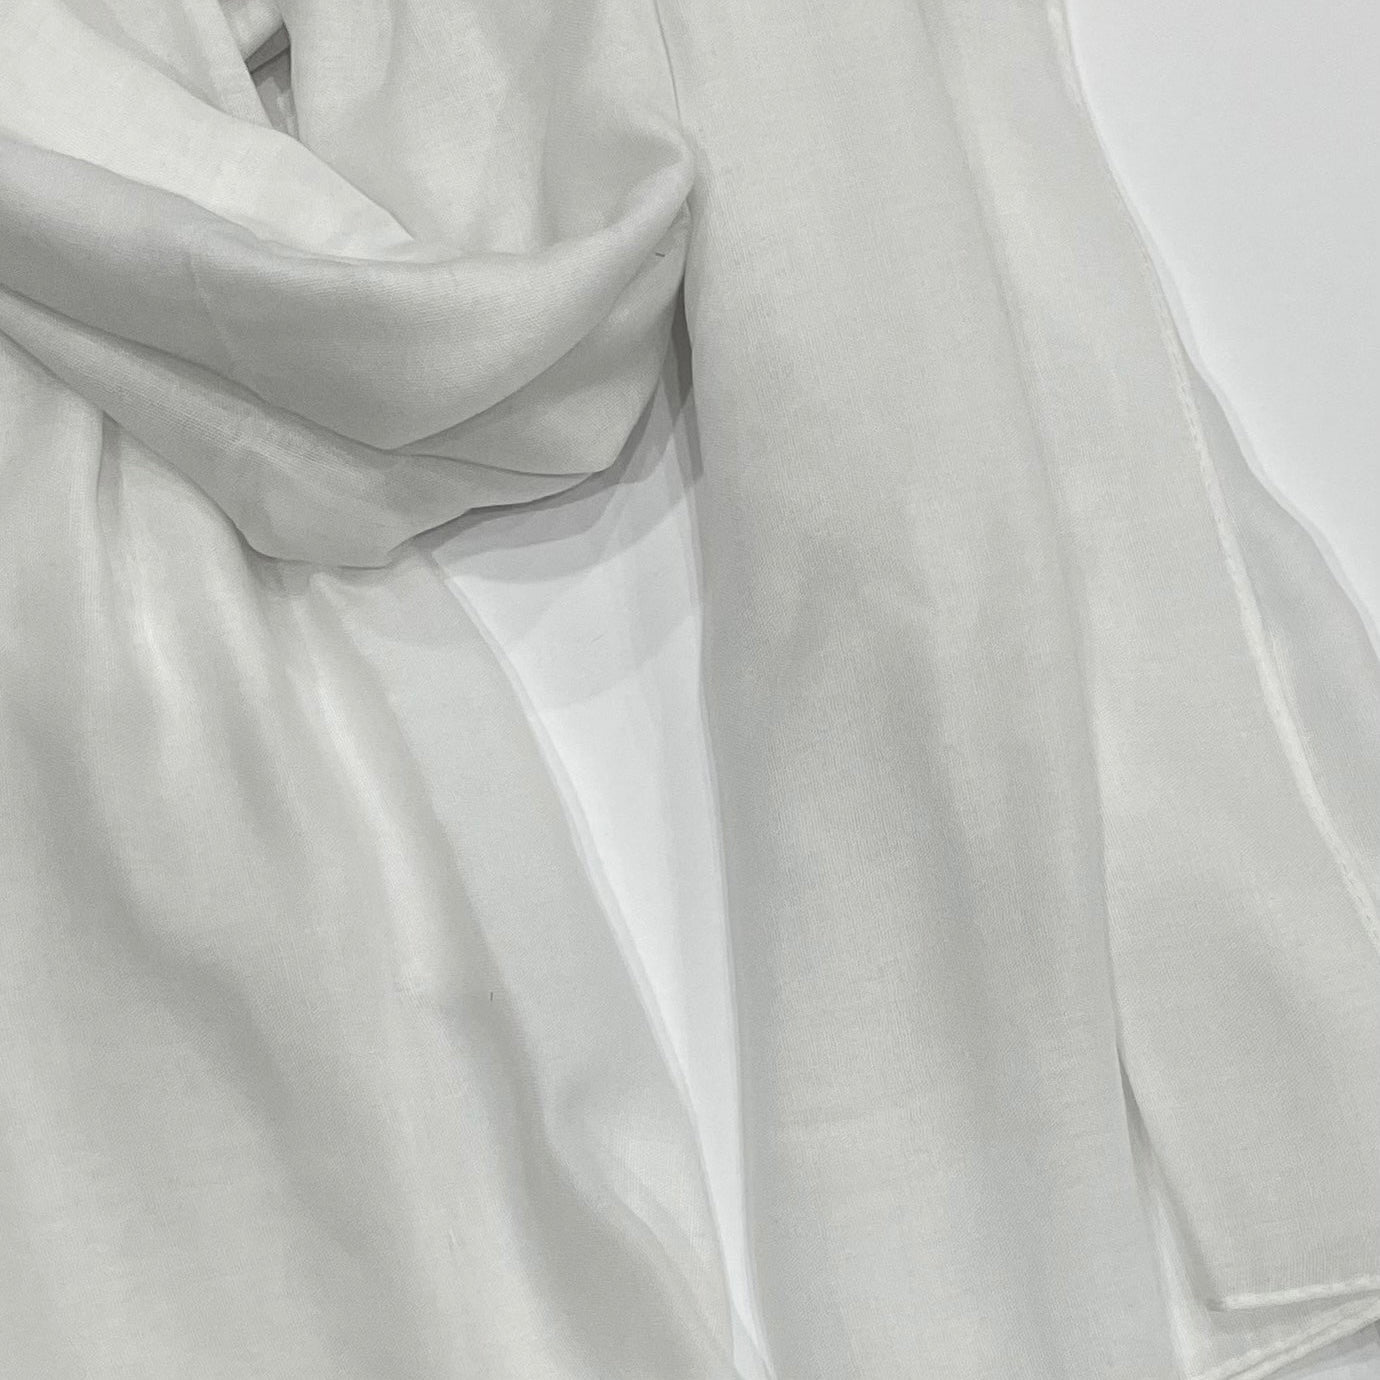 White Cotton Hijab